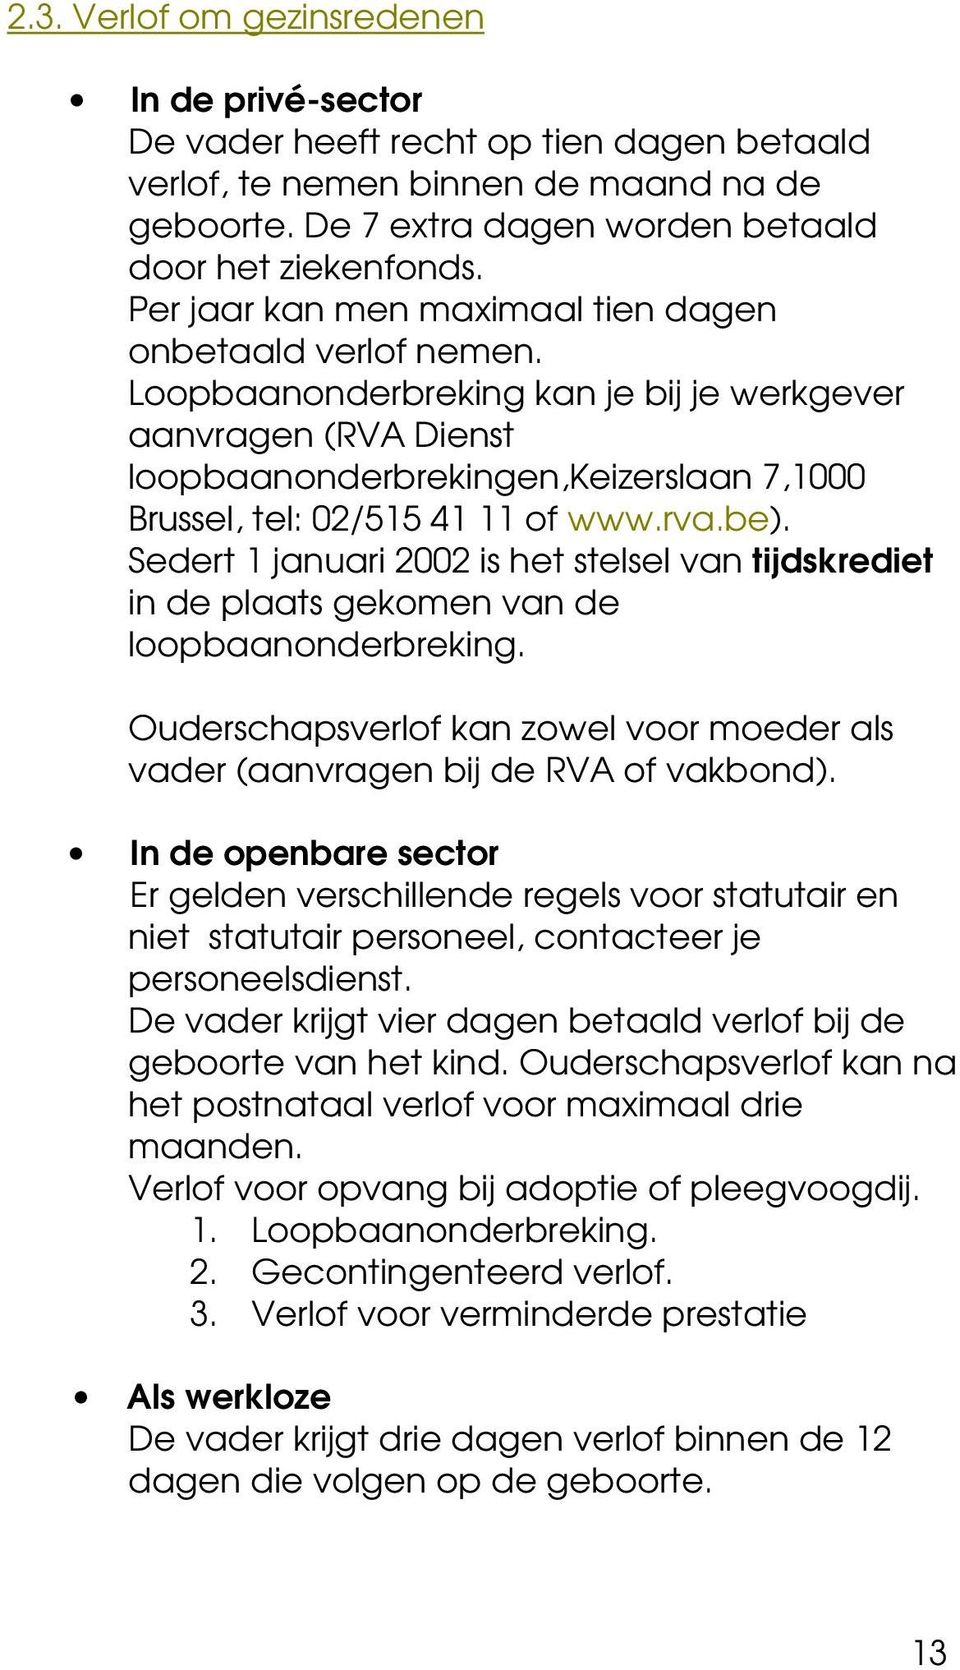 Loopbaanonderbreking kan je bij je werkgever aanvragen (RVA Dienst loopbaanonderbrekingen,keizerslaan 7,1000 Brussel, tel: 02/515 41 11 of www.rva.be).